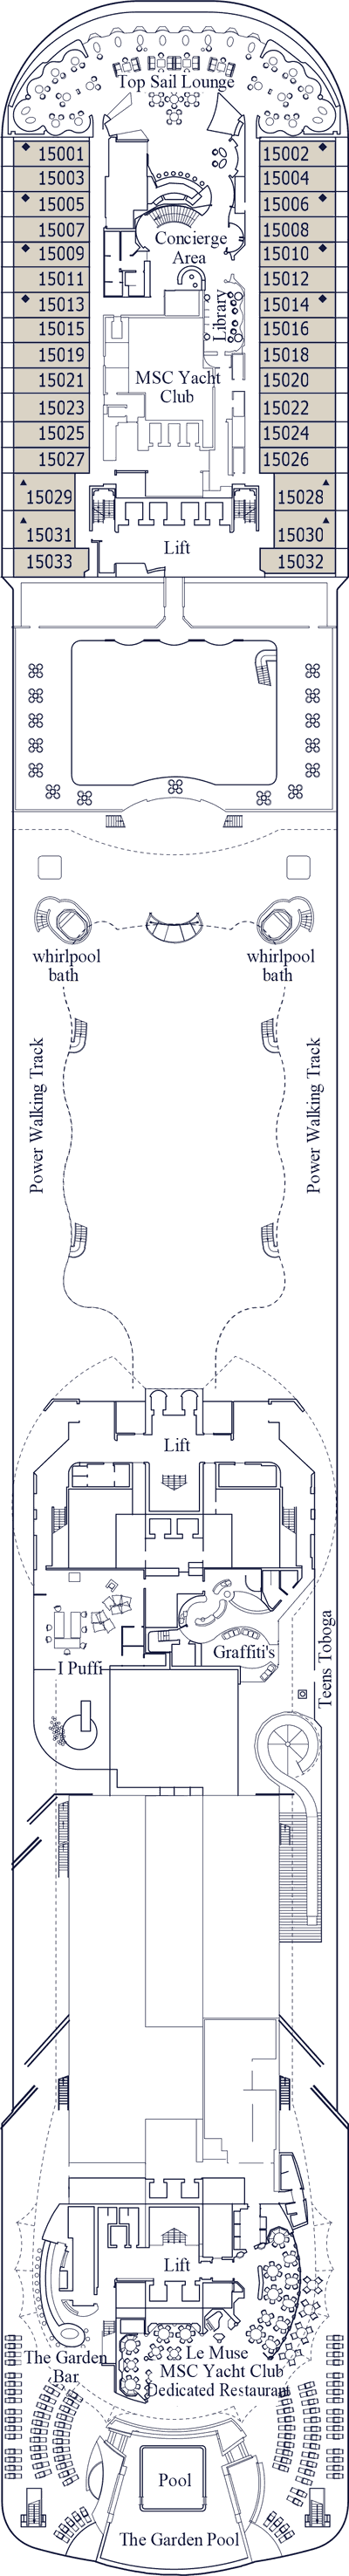 MSC Divina - Decksplan Deck 15